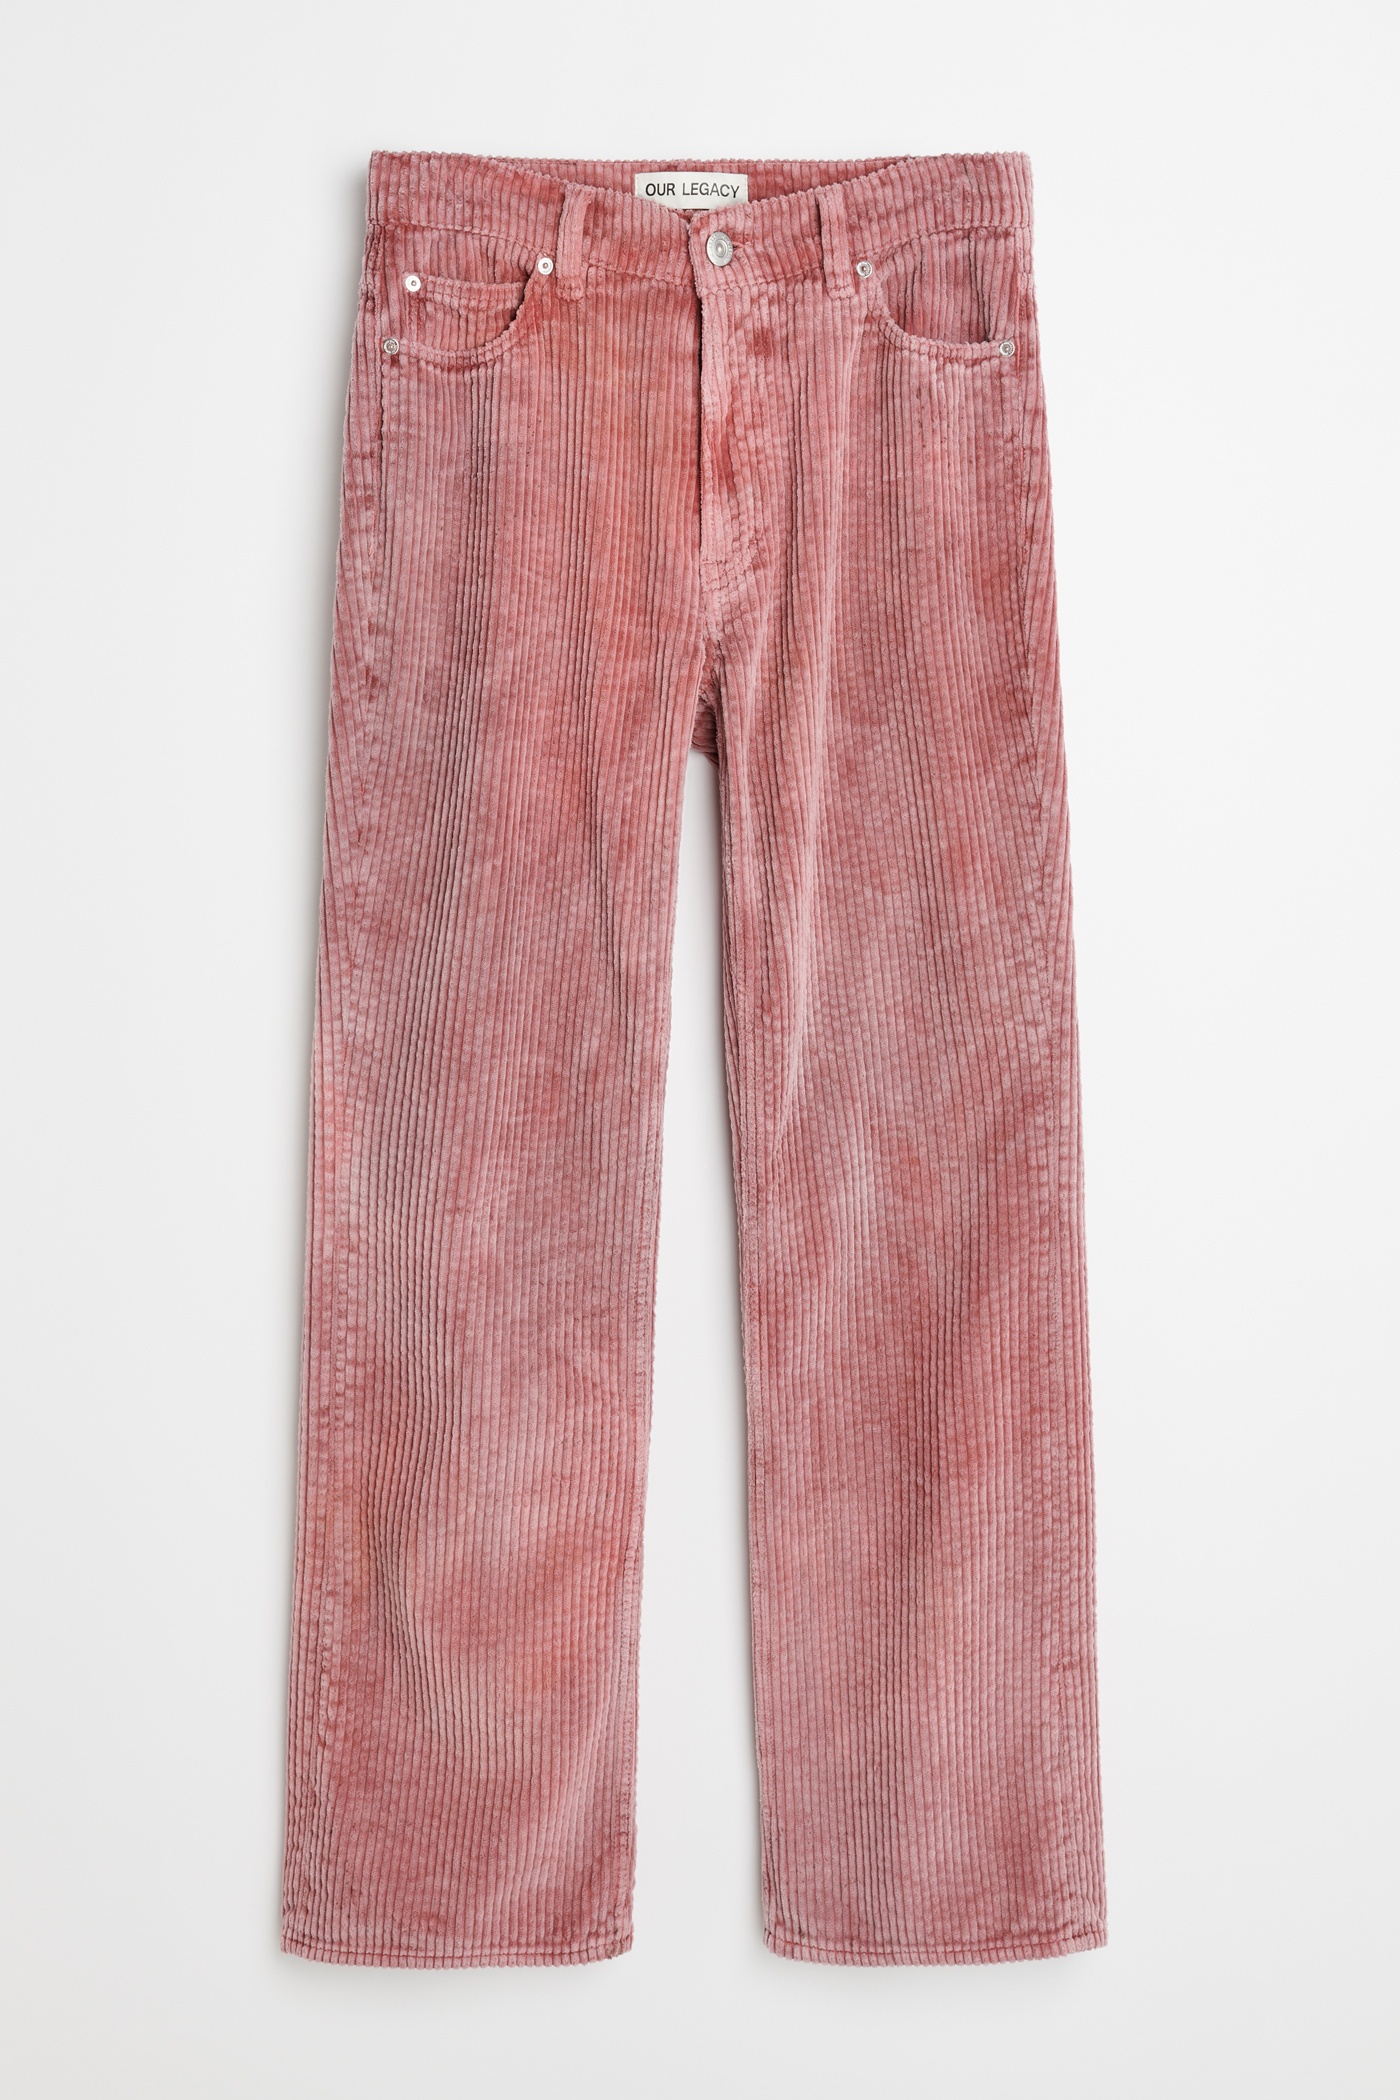 70s Cut Antique Pink Rustic Cord - 8